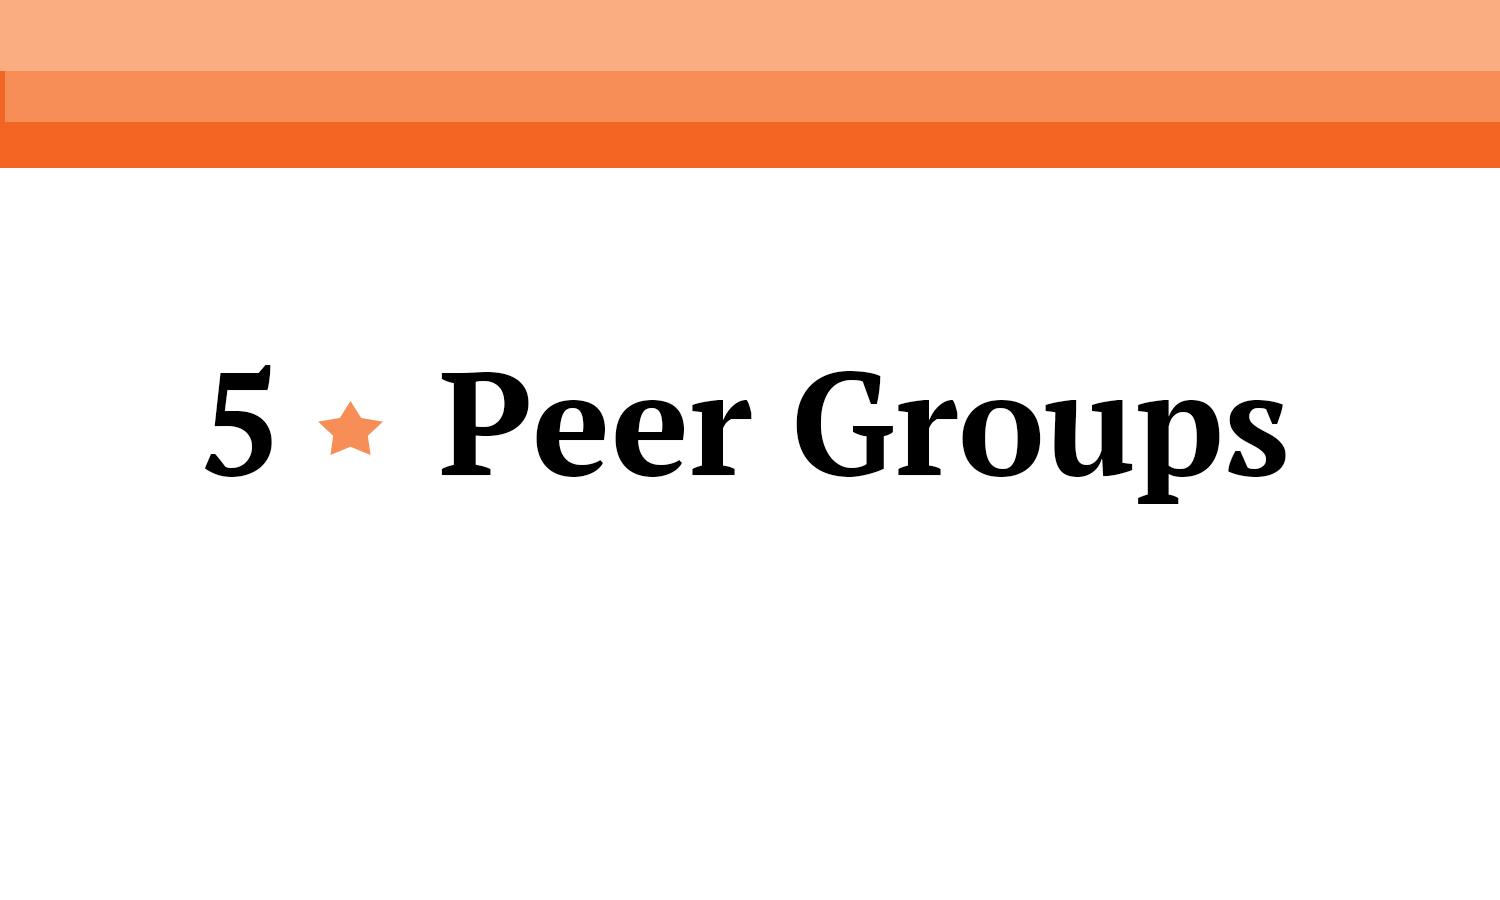 #5 information on peer groups